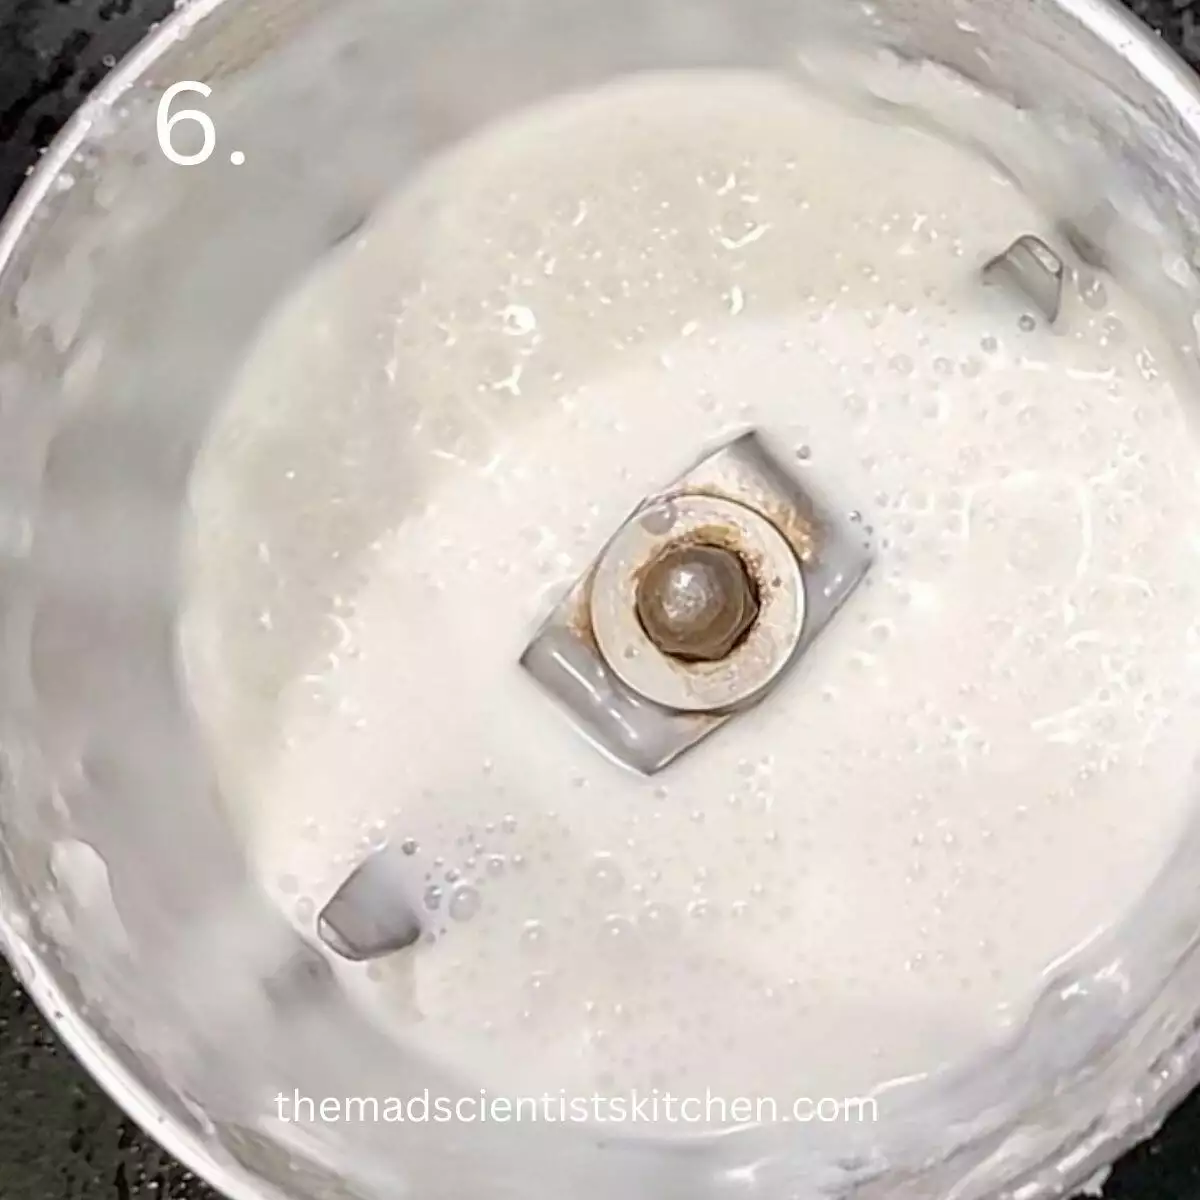 Blend yogurt smooth